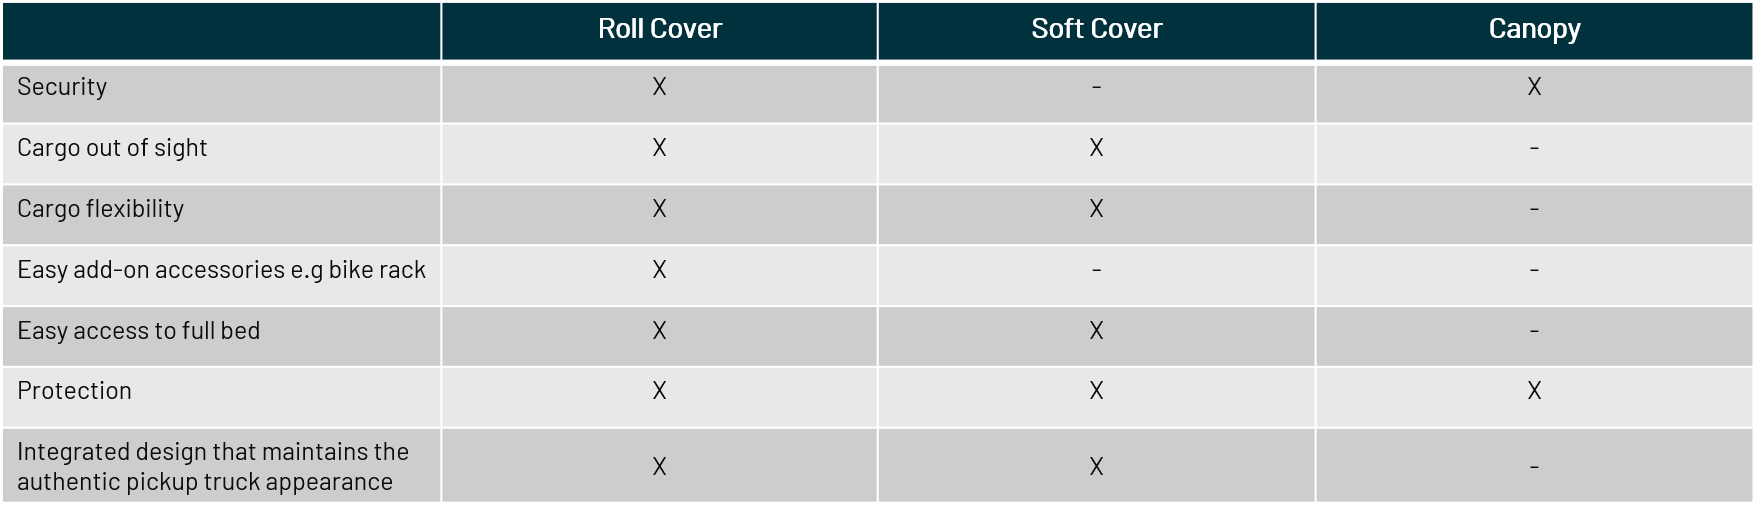 Mountain Top Comparison guide tonneau cover vs canopy